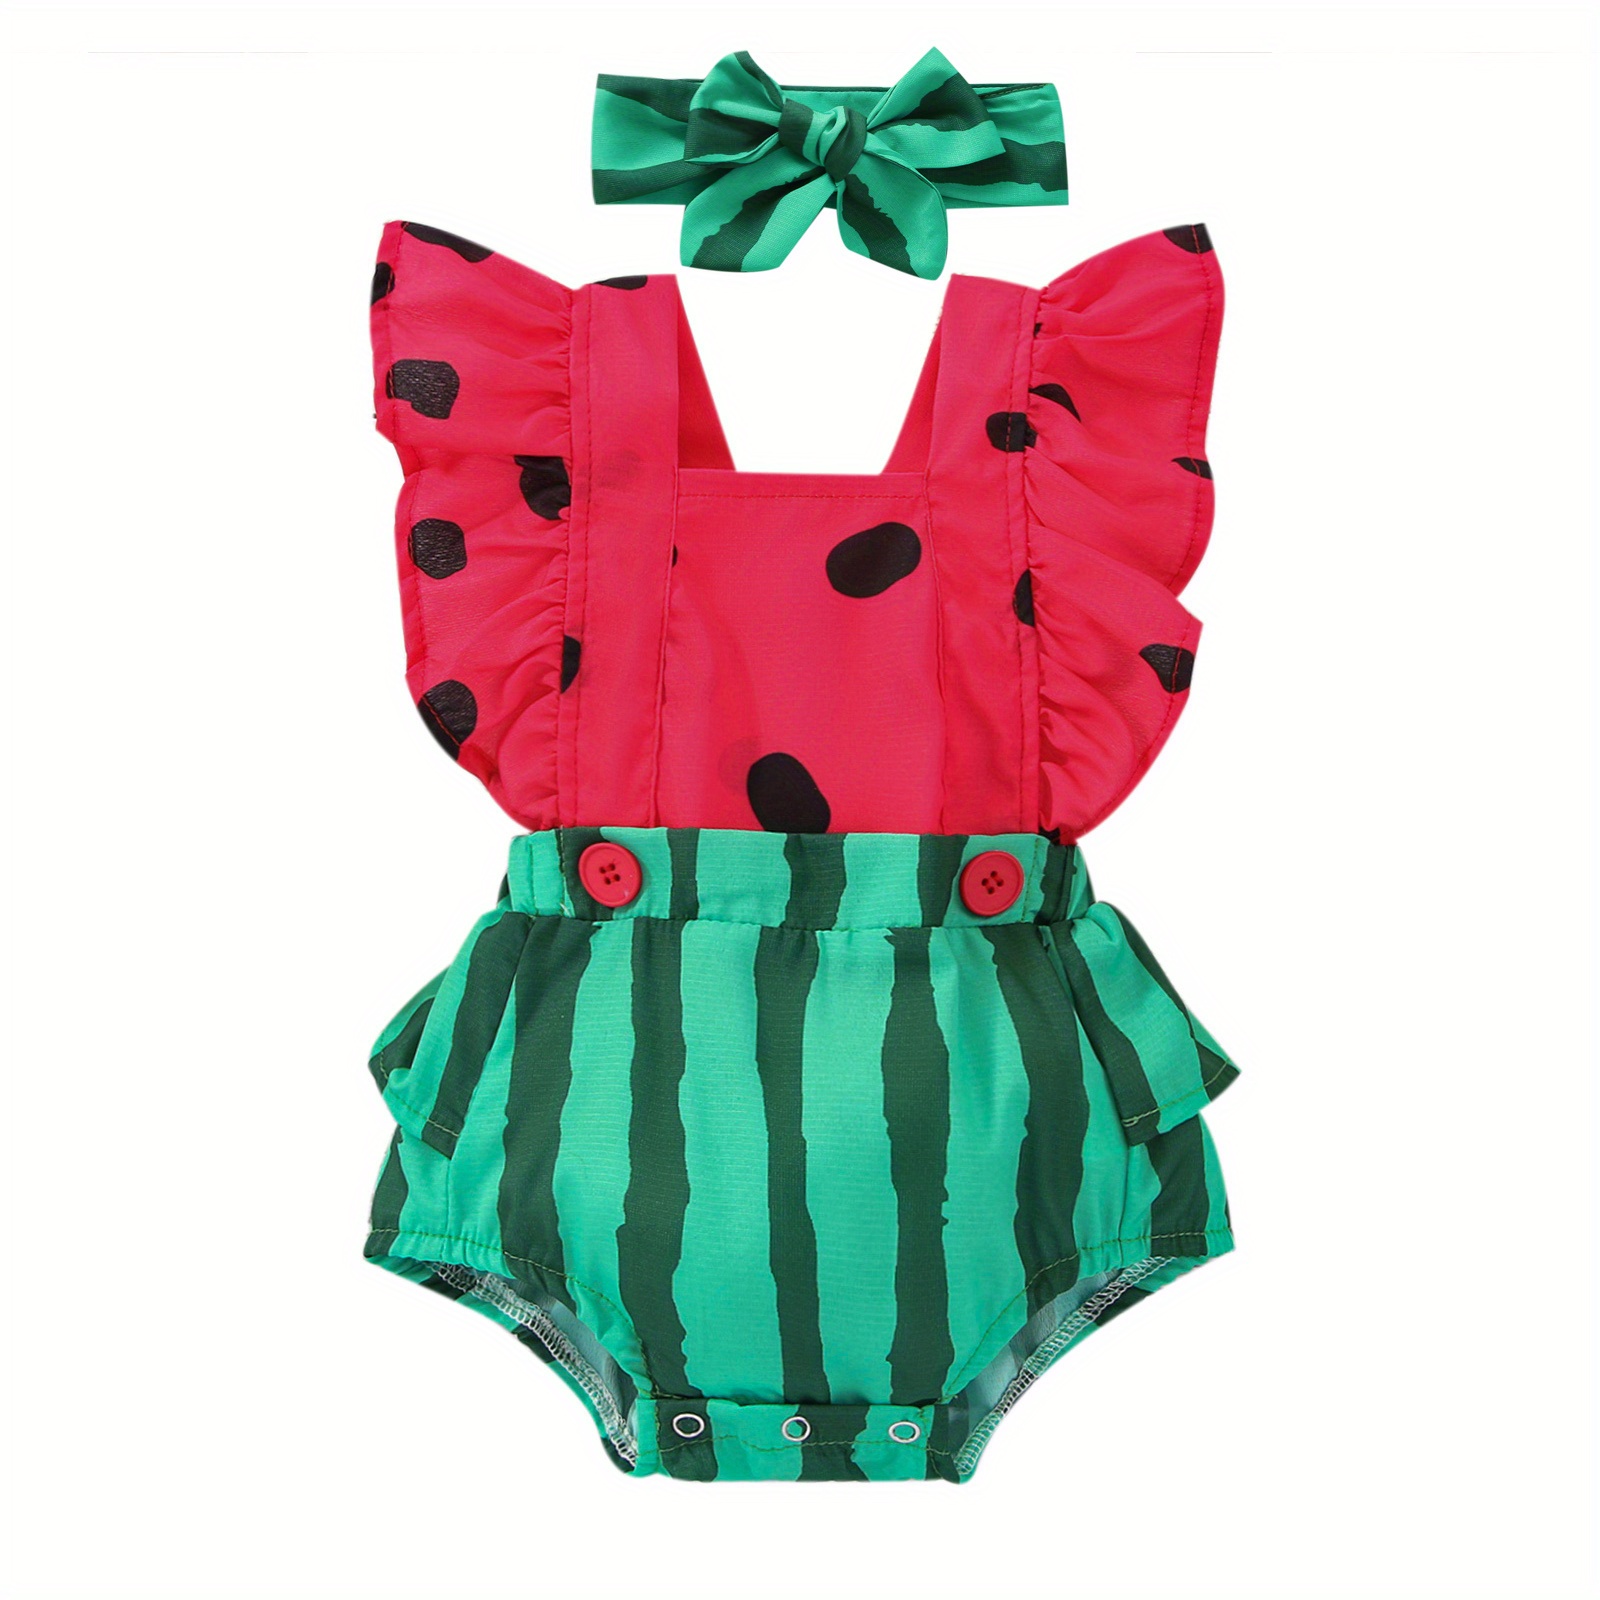 

Newborn Baby Fashion Romper Outfits, Watermelon Print Design Square Neck Fly Sleeve Bodysuit+bow Headband